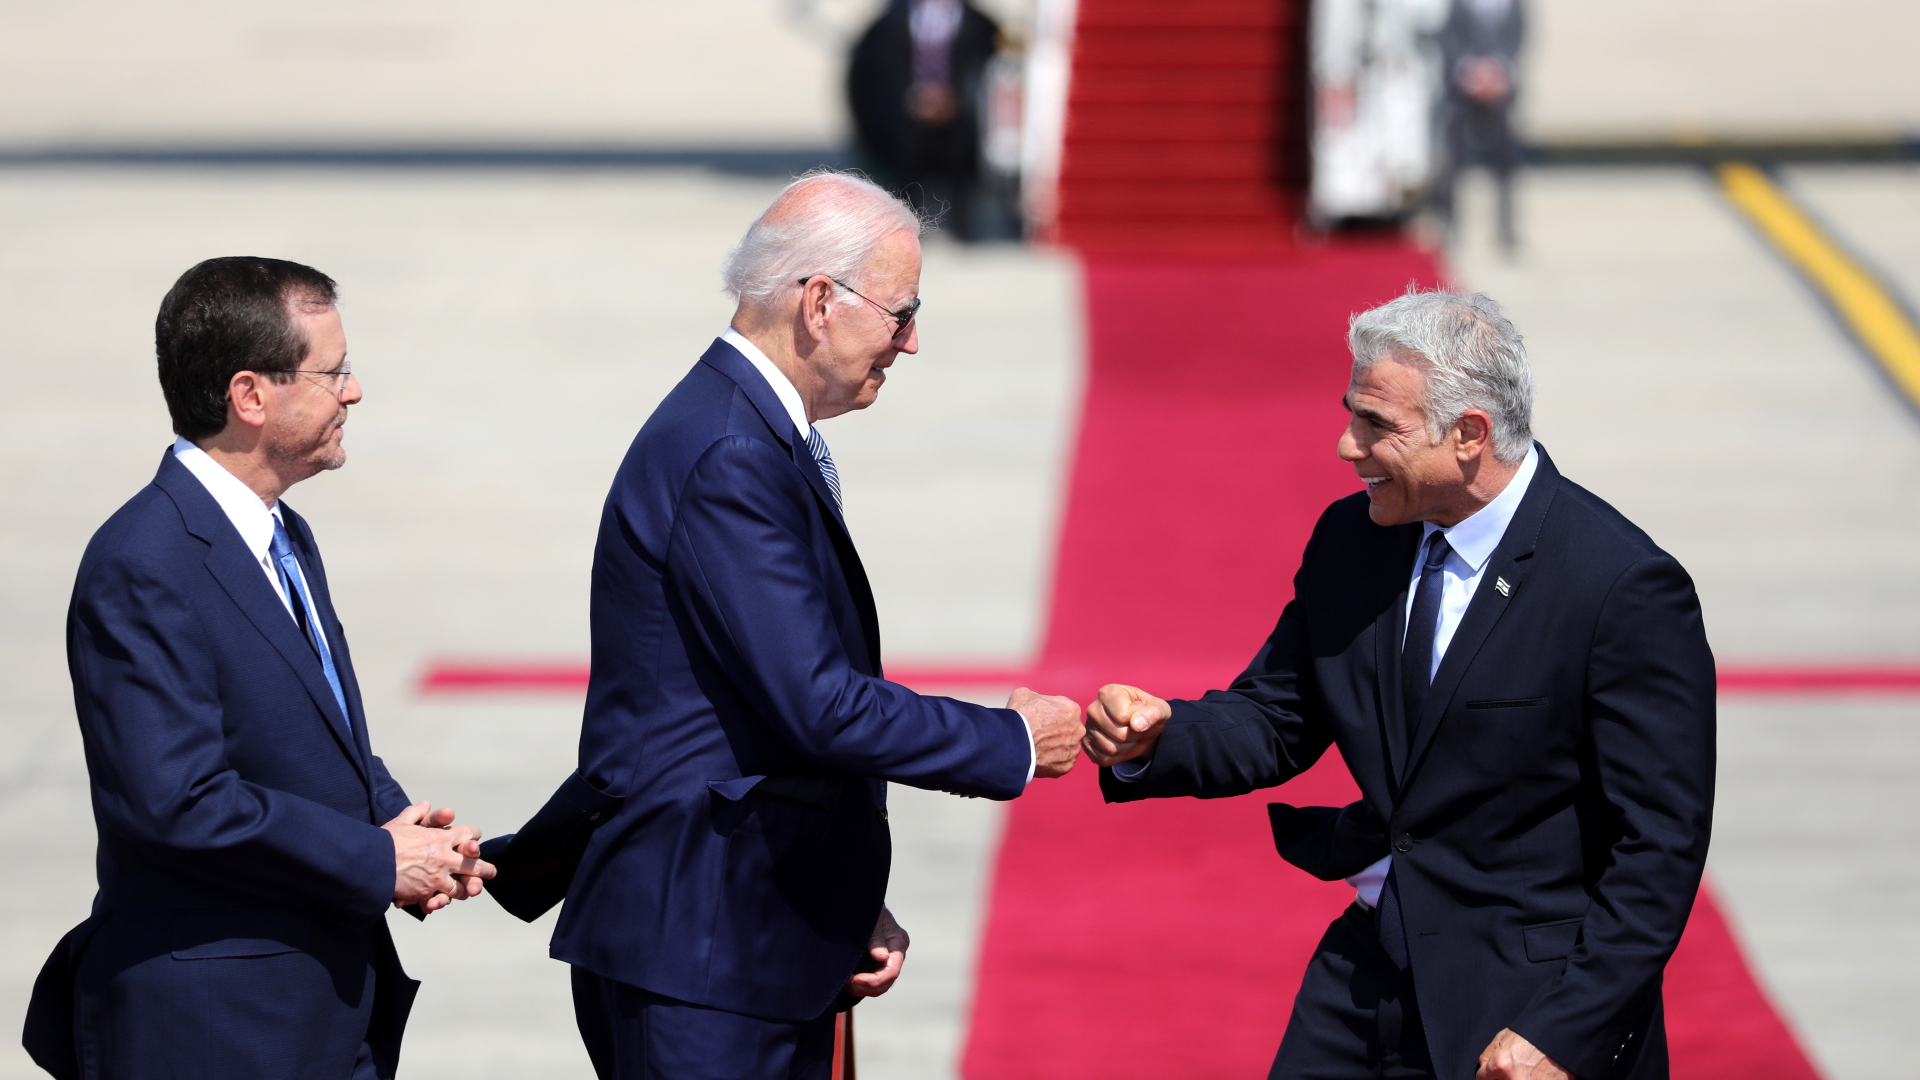 Joe Biden begrüßt in Israel Jair Lapid per Faust, links daneben steht Izchak Herzog. 